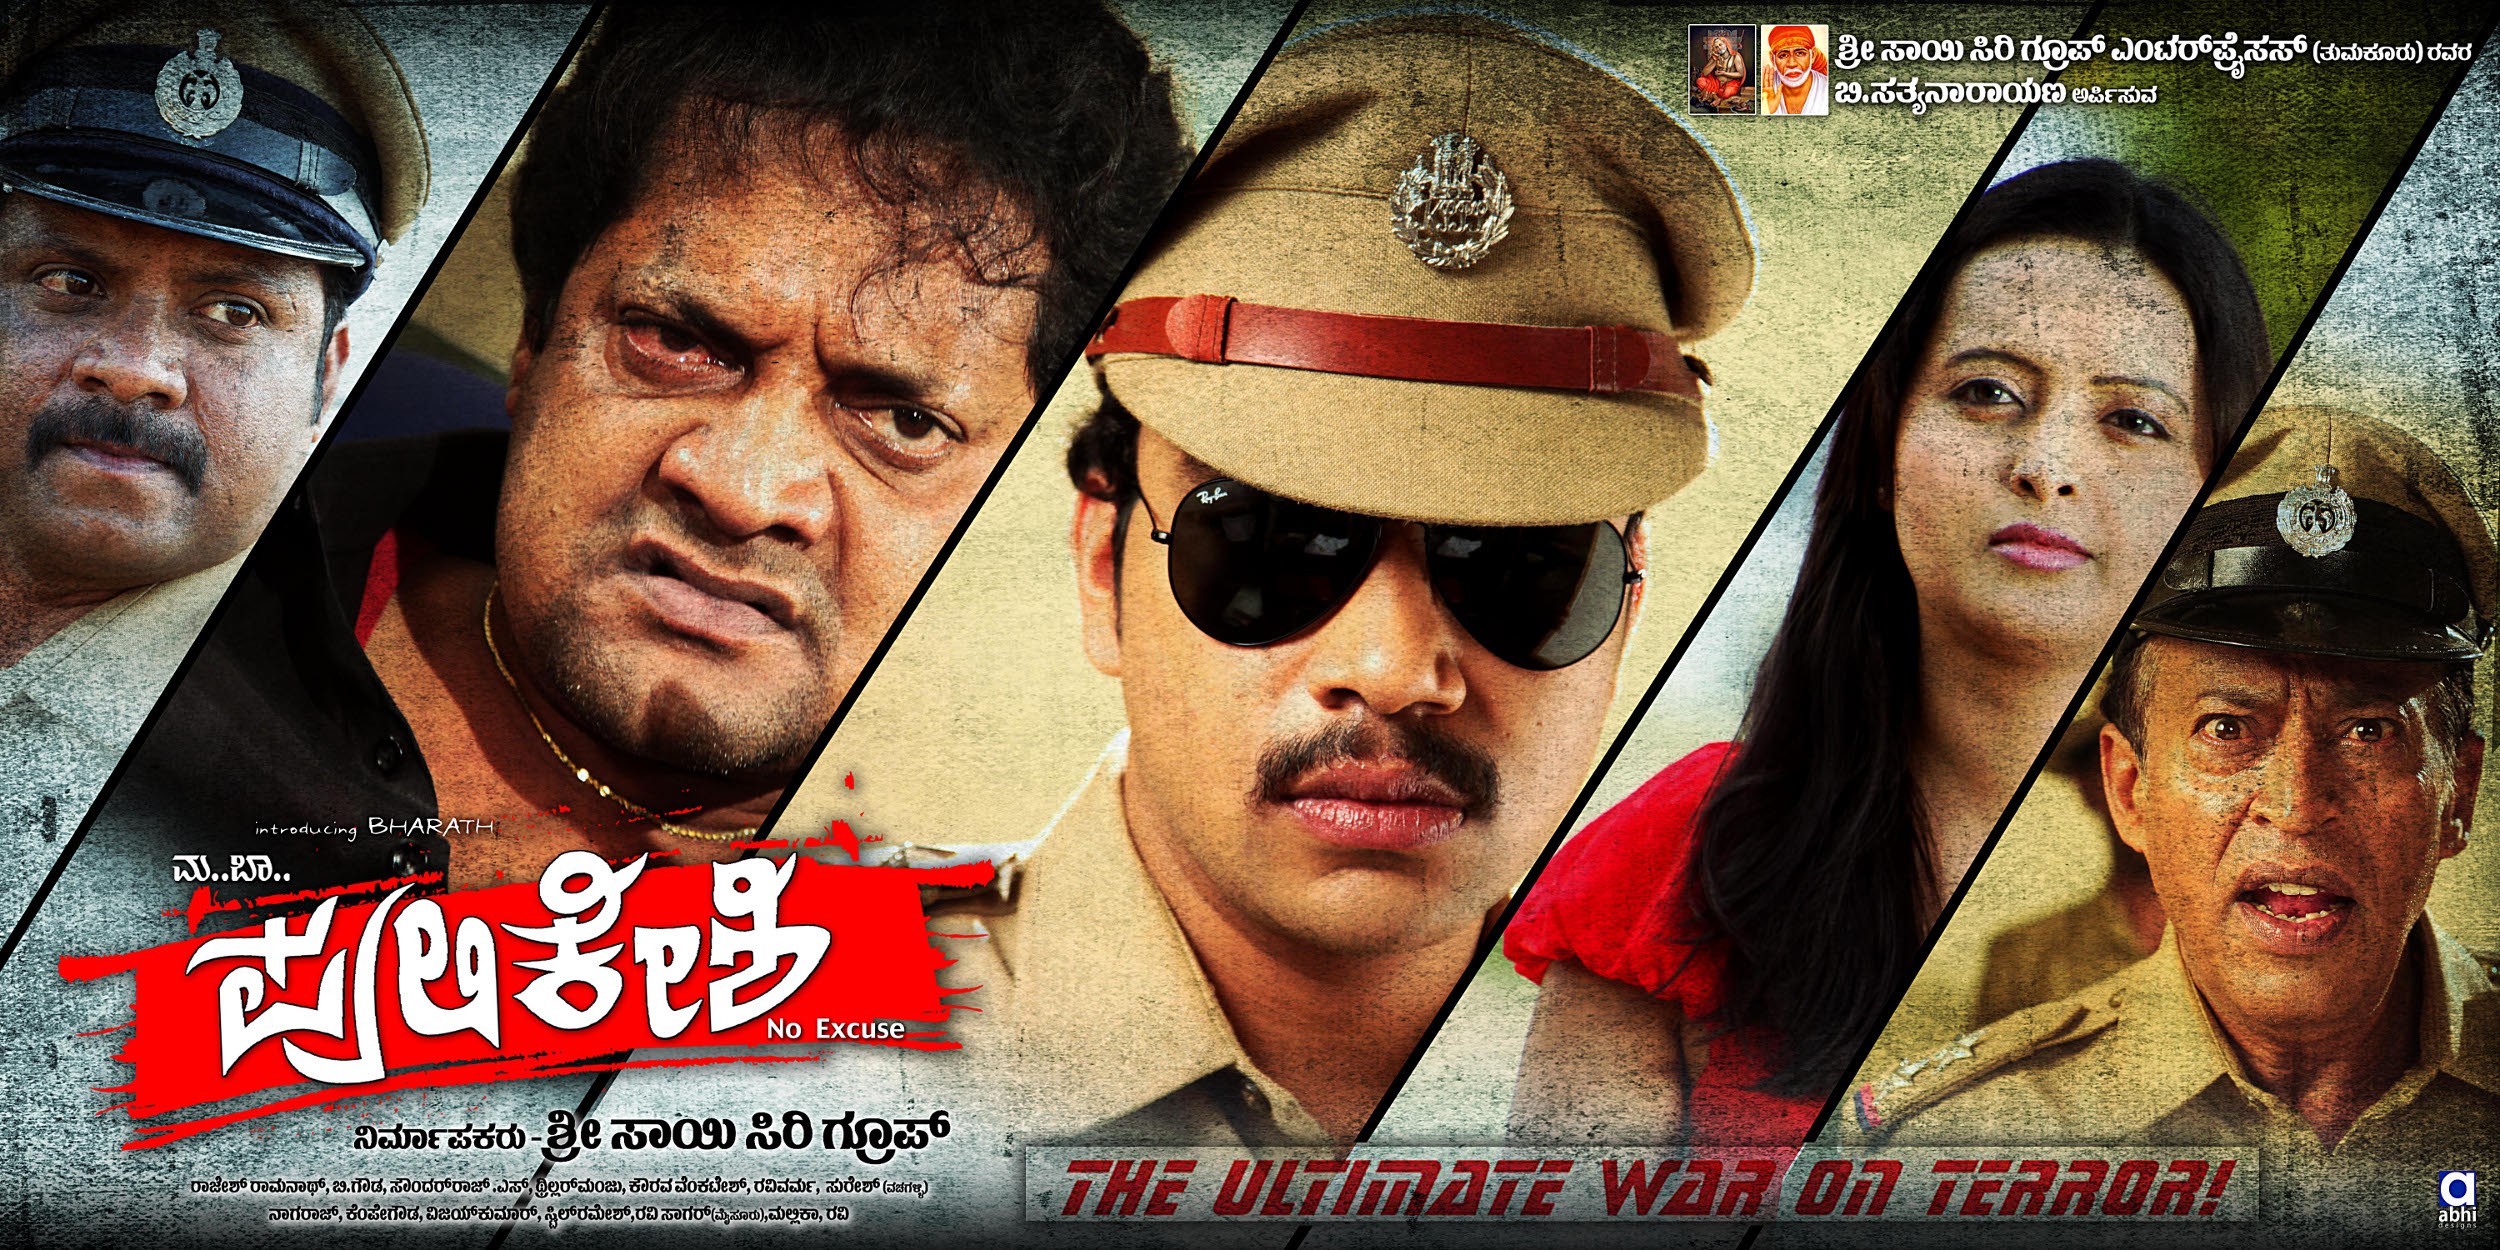 Mega Sized Movie Poster Image for Pulakeshi (#5 of 15)